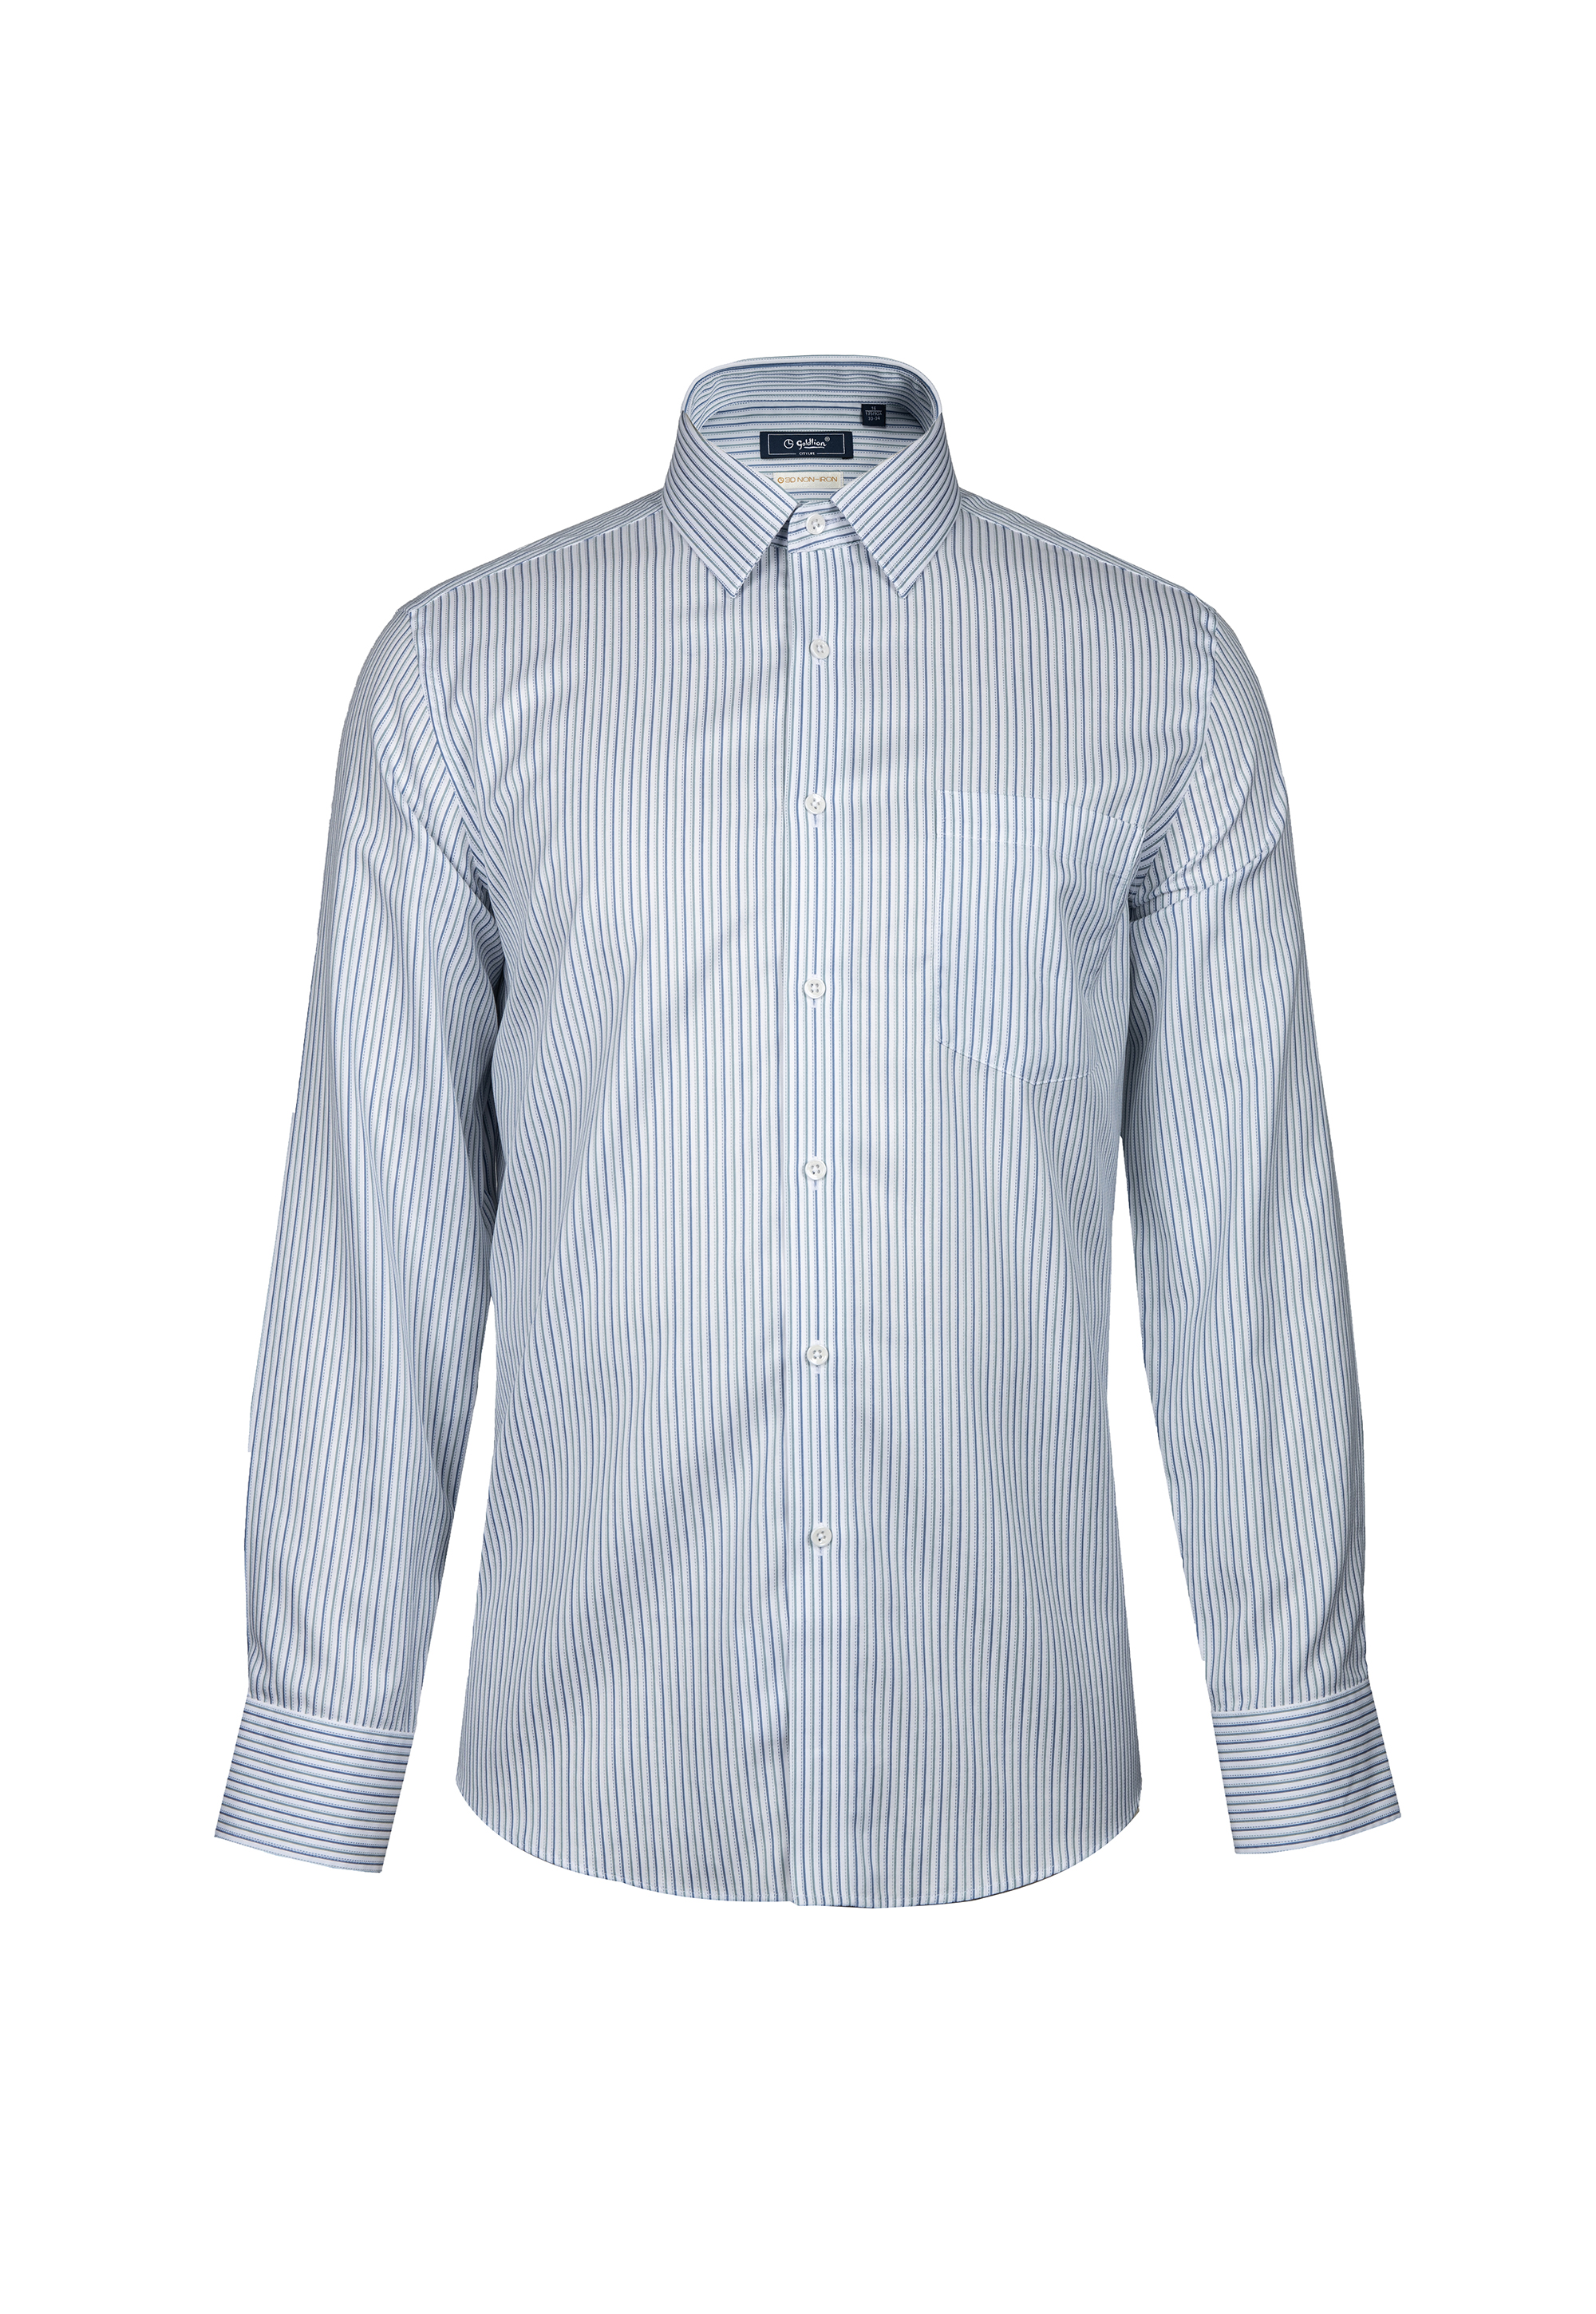 Goldlion Business Trim Fit Wrinkle-Free Long-Sleeved Shirt